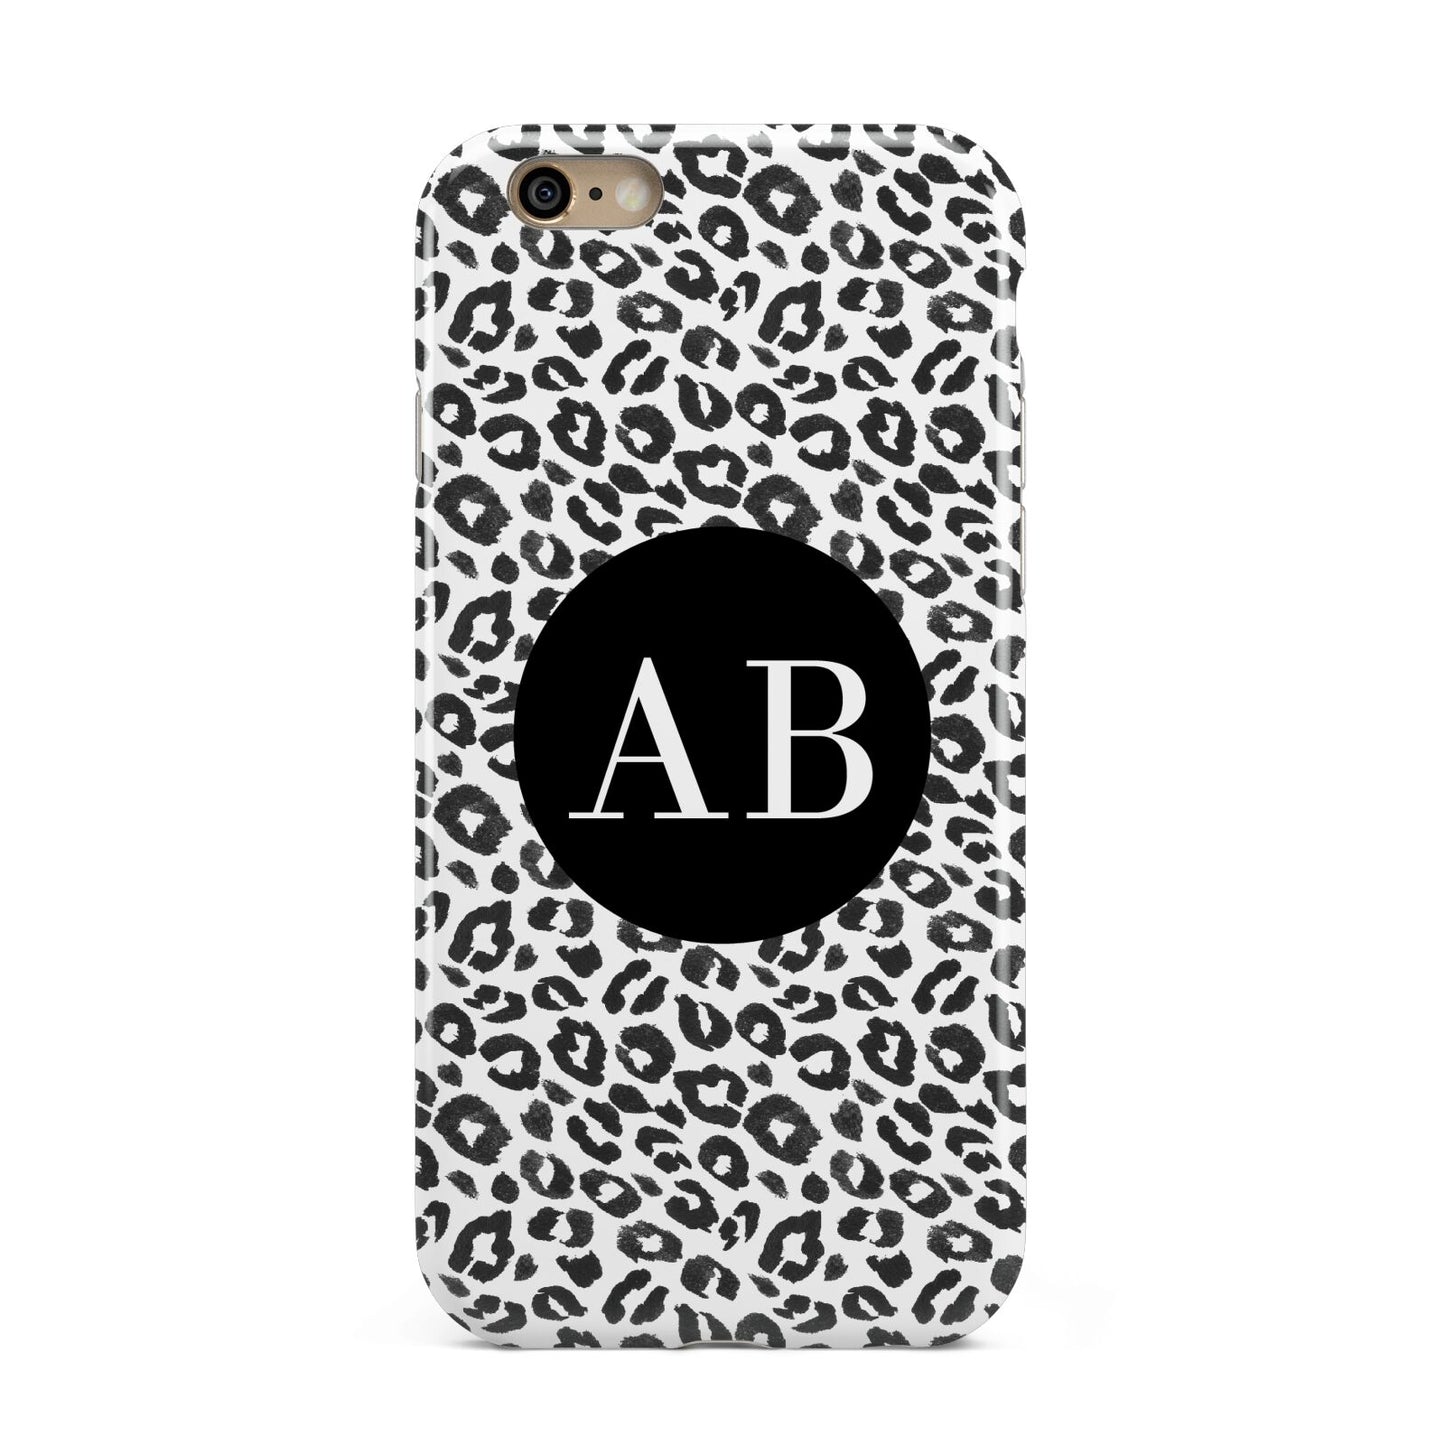 Leopard Print Black and White Apple iPhone 6 3D Tough Case